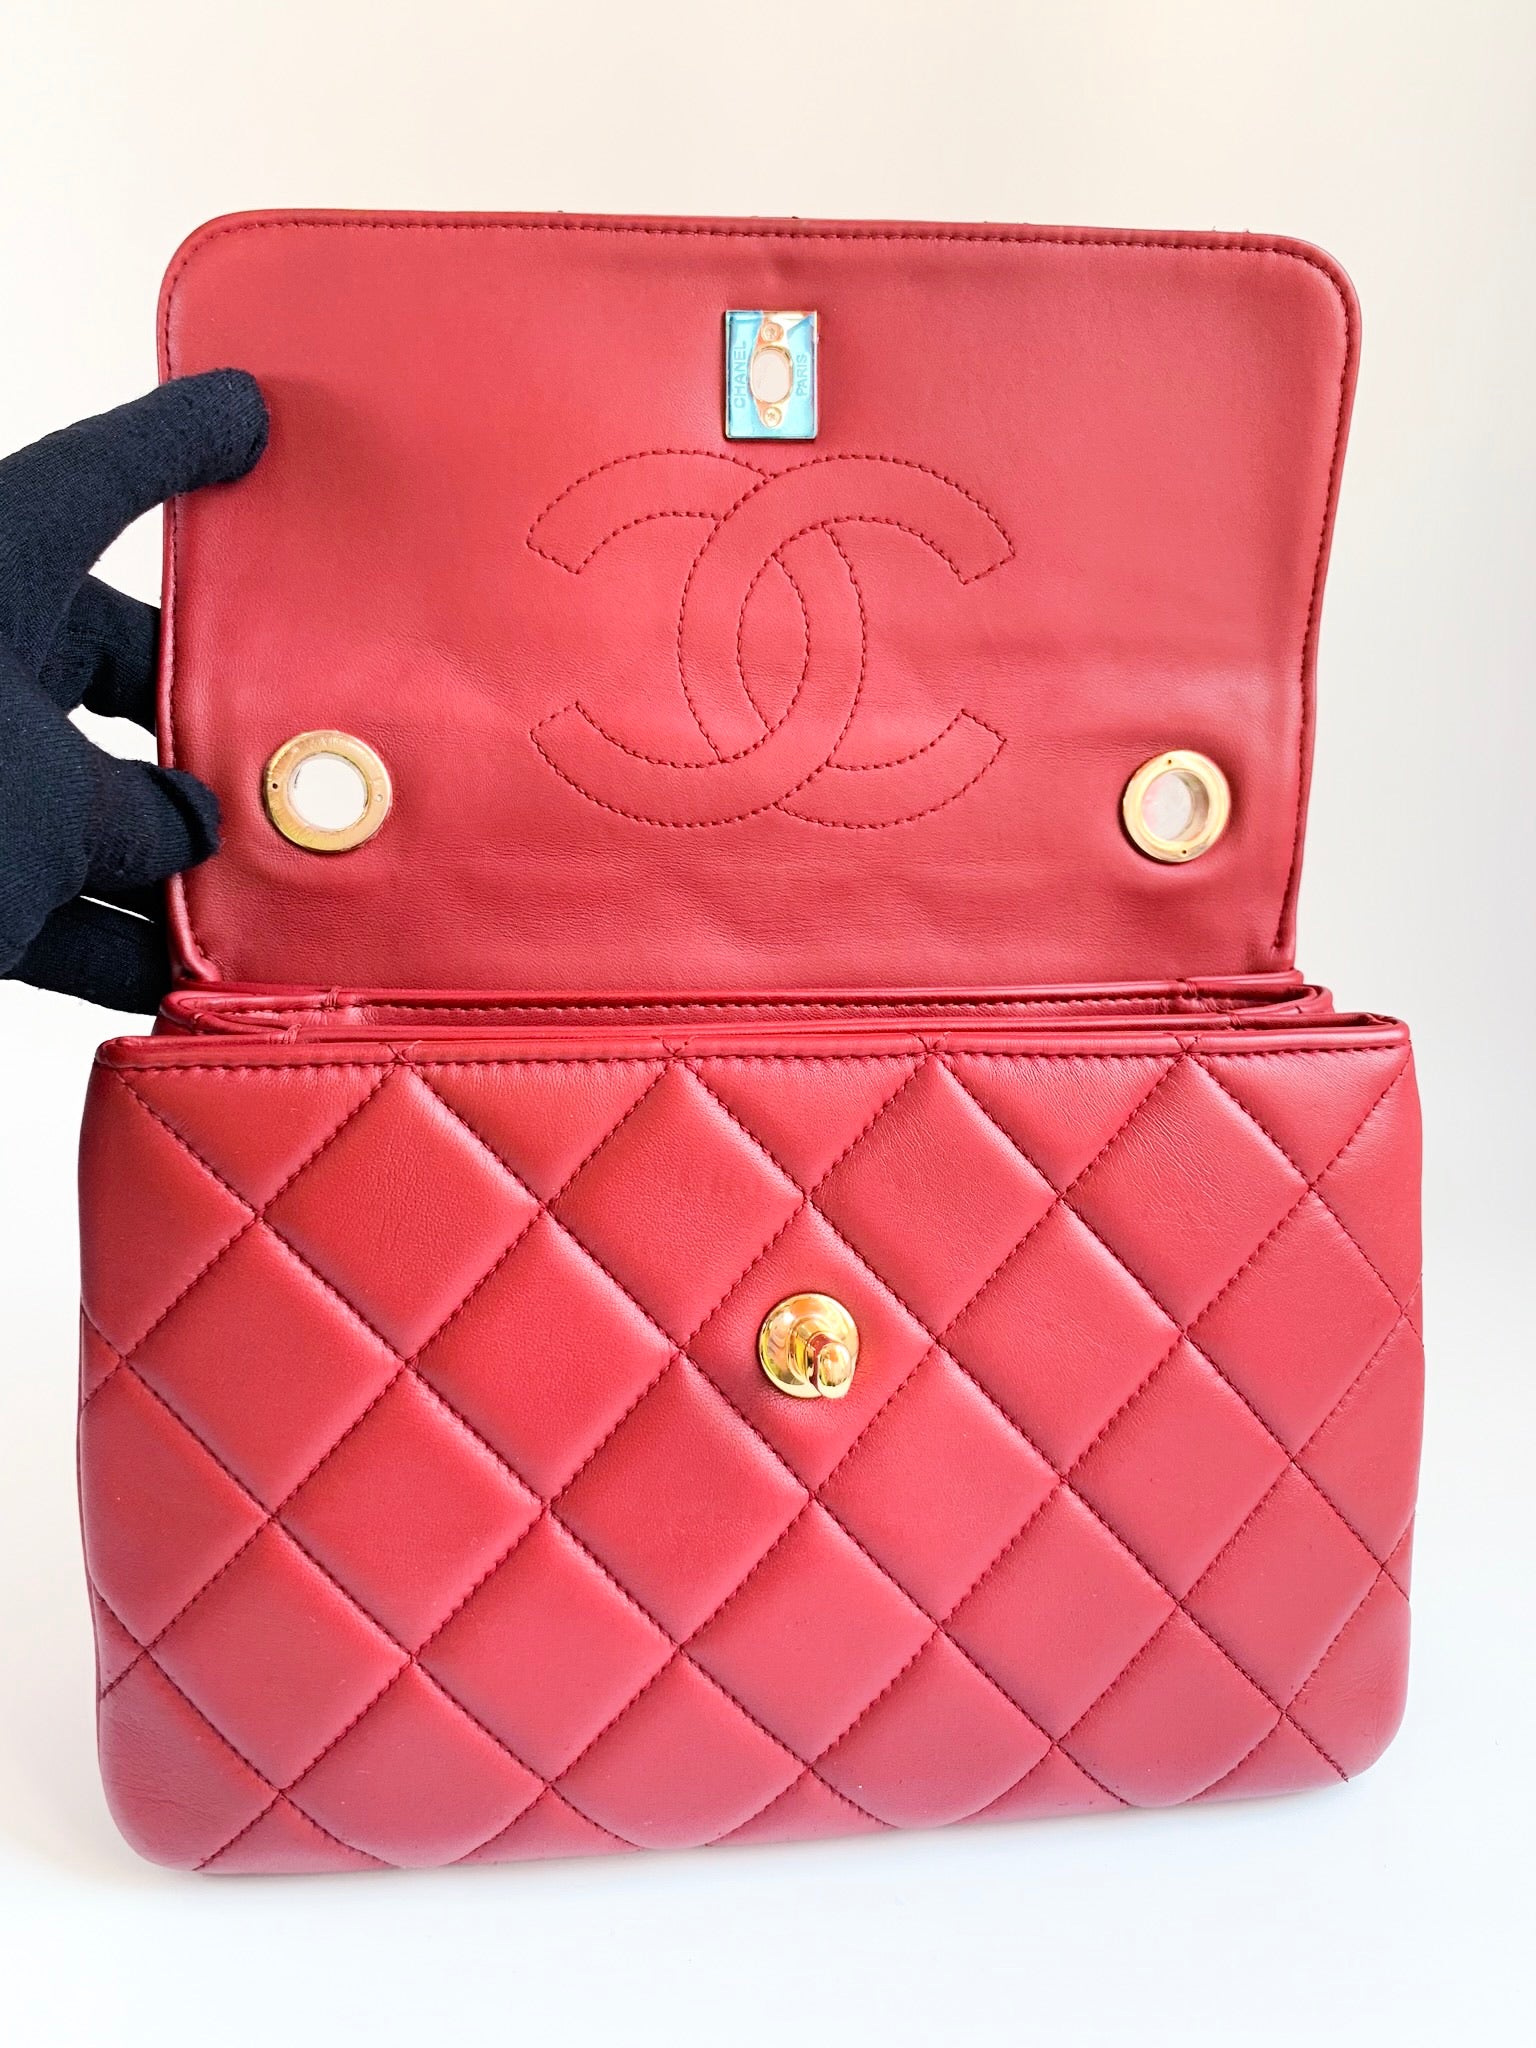 Trendy CC Chanel Bags - Vestiaire Collective